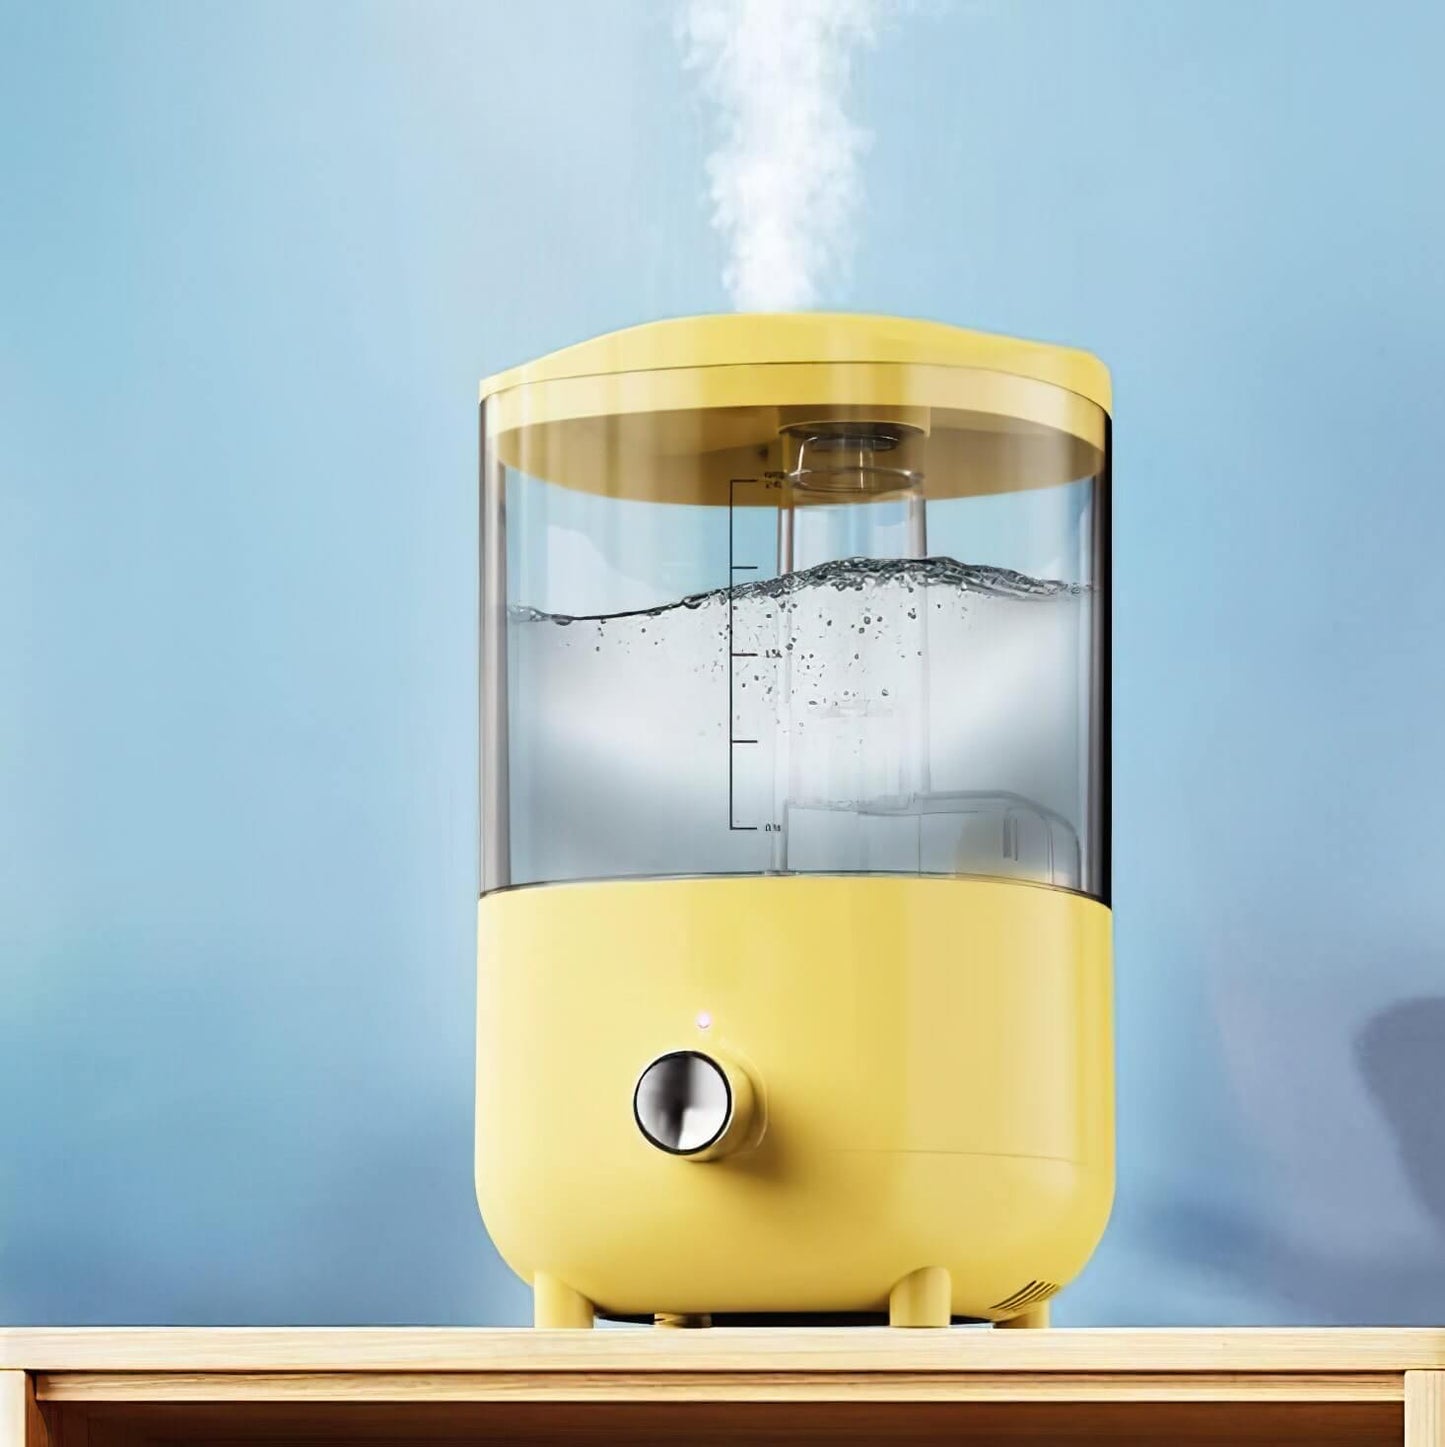 Deluxe Ultrasonic Cool Mist Humidifier | Top Fill Water Tank